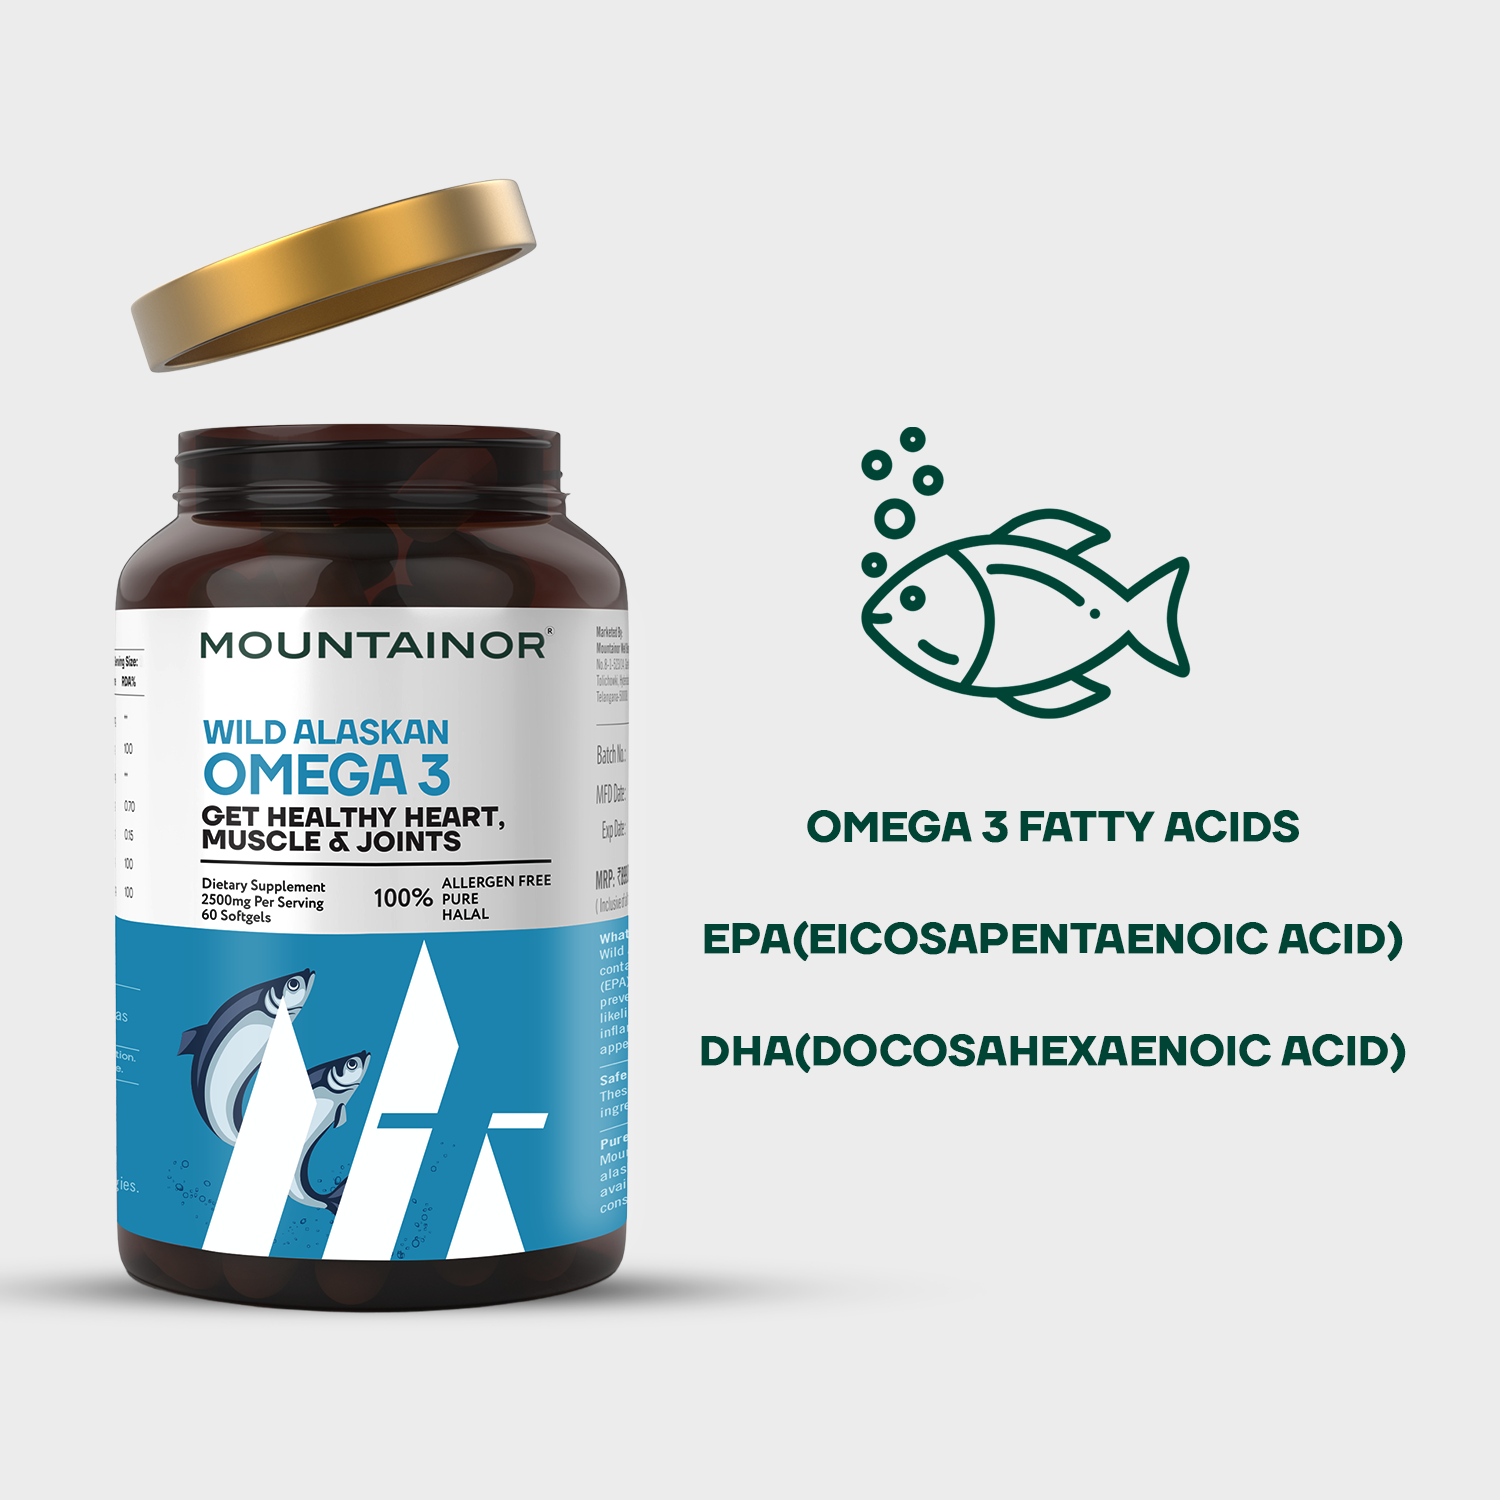 Wild Alaskan Omega-3 Fish Oil + Pure Korean Ginseng Root Extract (Combo)